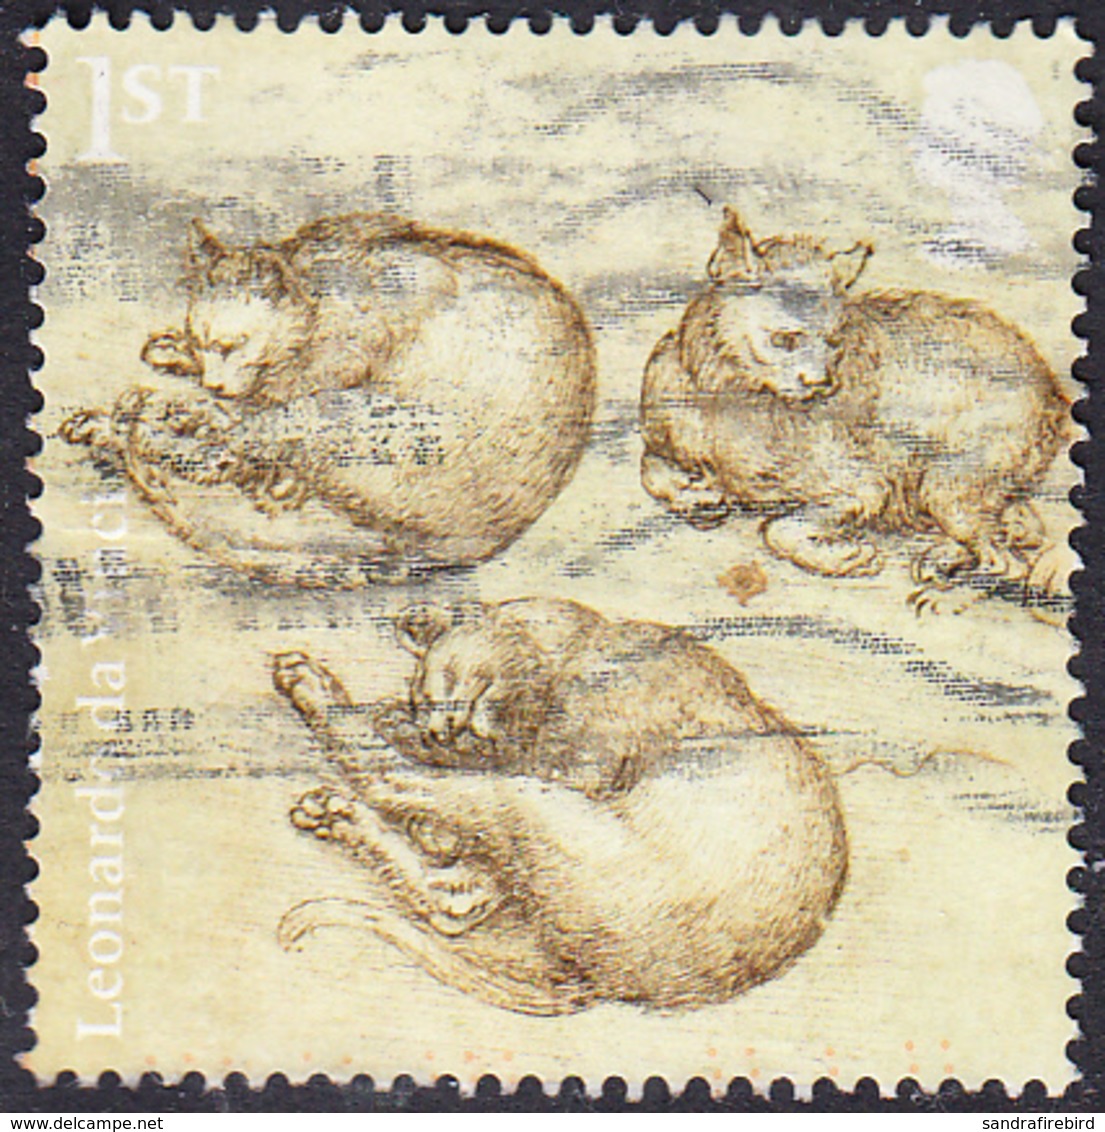 2019   Leonardo Da Vinci Sketchwork - Cats   1st - Used Stamps